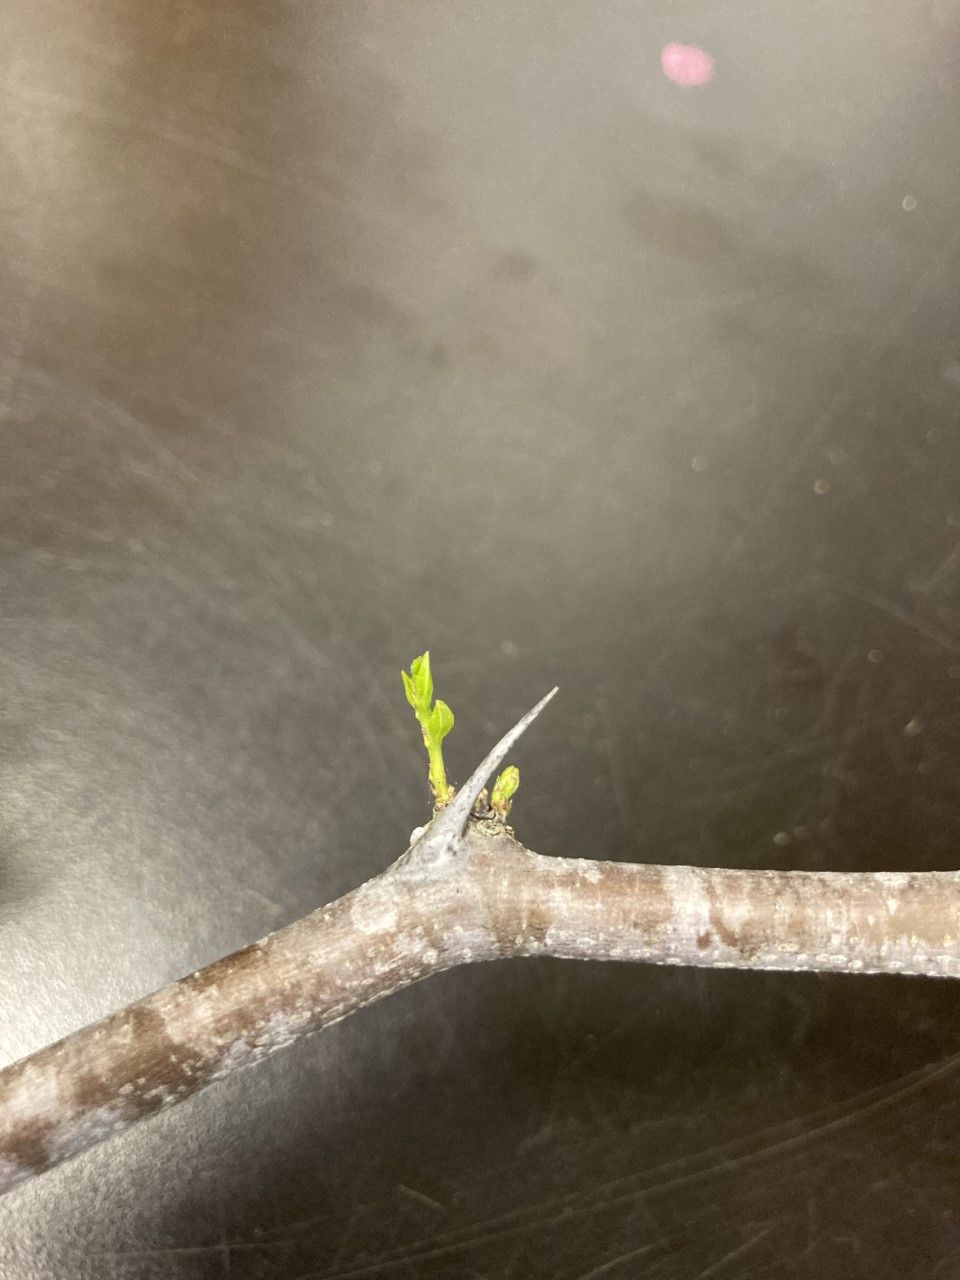 Emerging vegetative buds, protected by adjacent thorn.